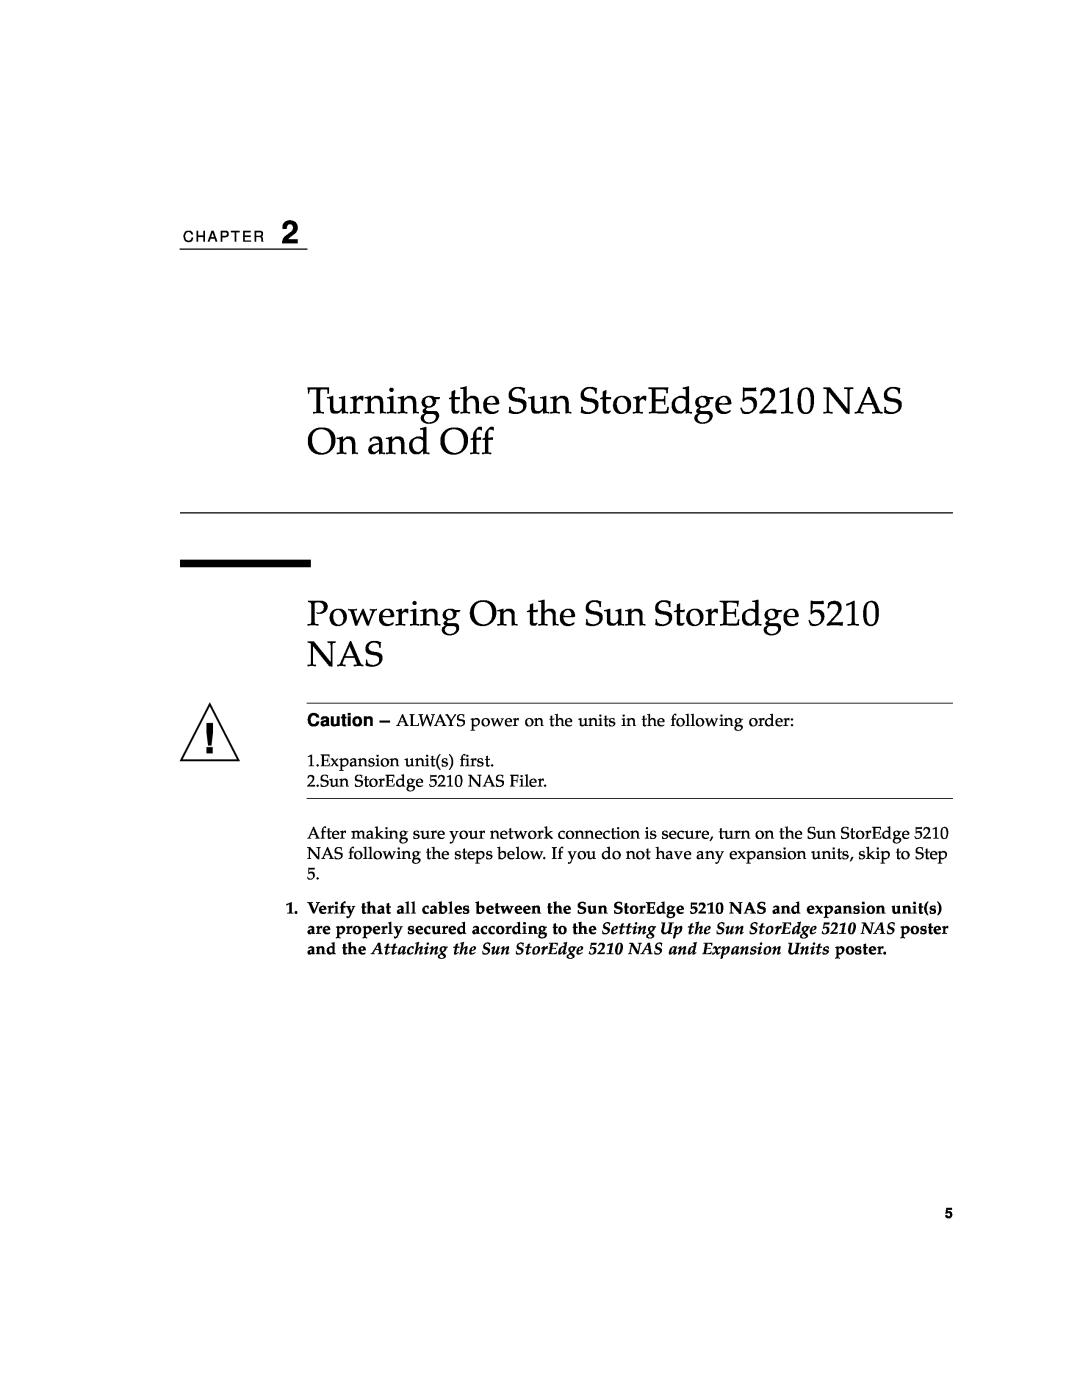 Sun Microsystems manual Turning the Sun StorEdge 5210 NAS On and Off, Powering On the Sun StorEdge NAS 